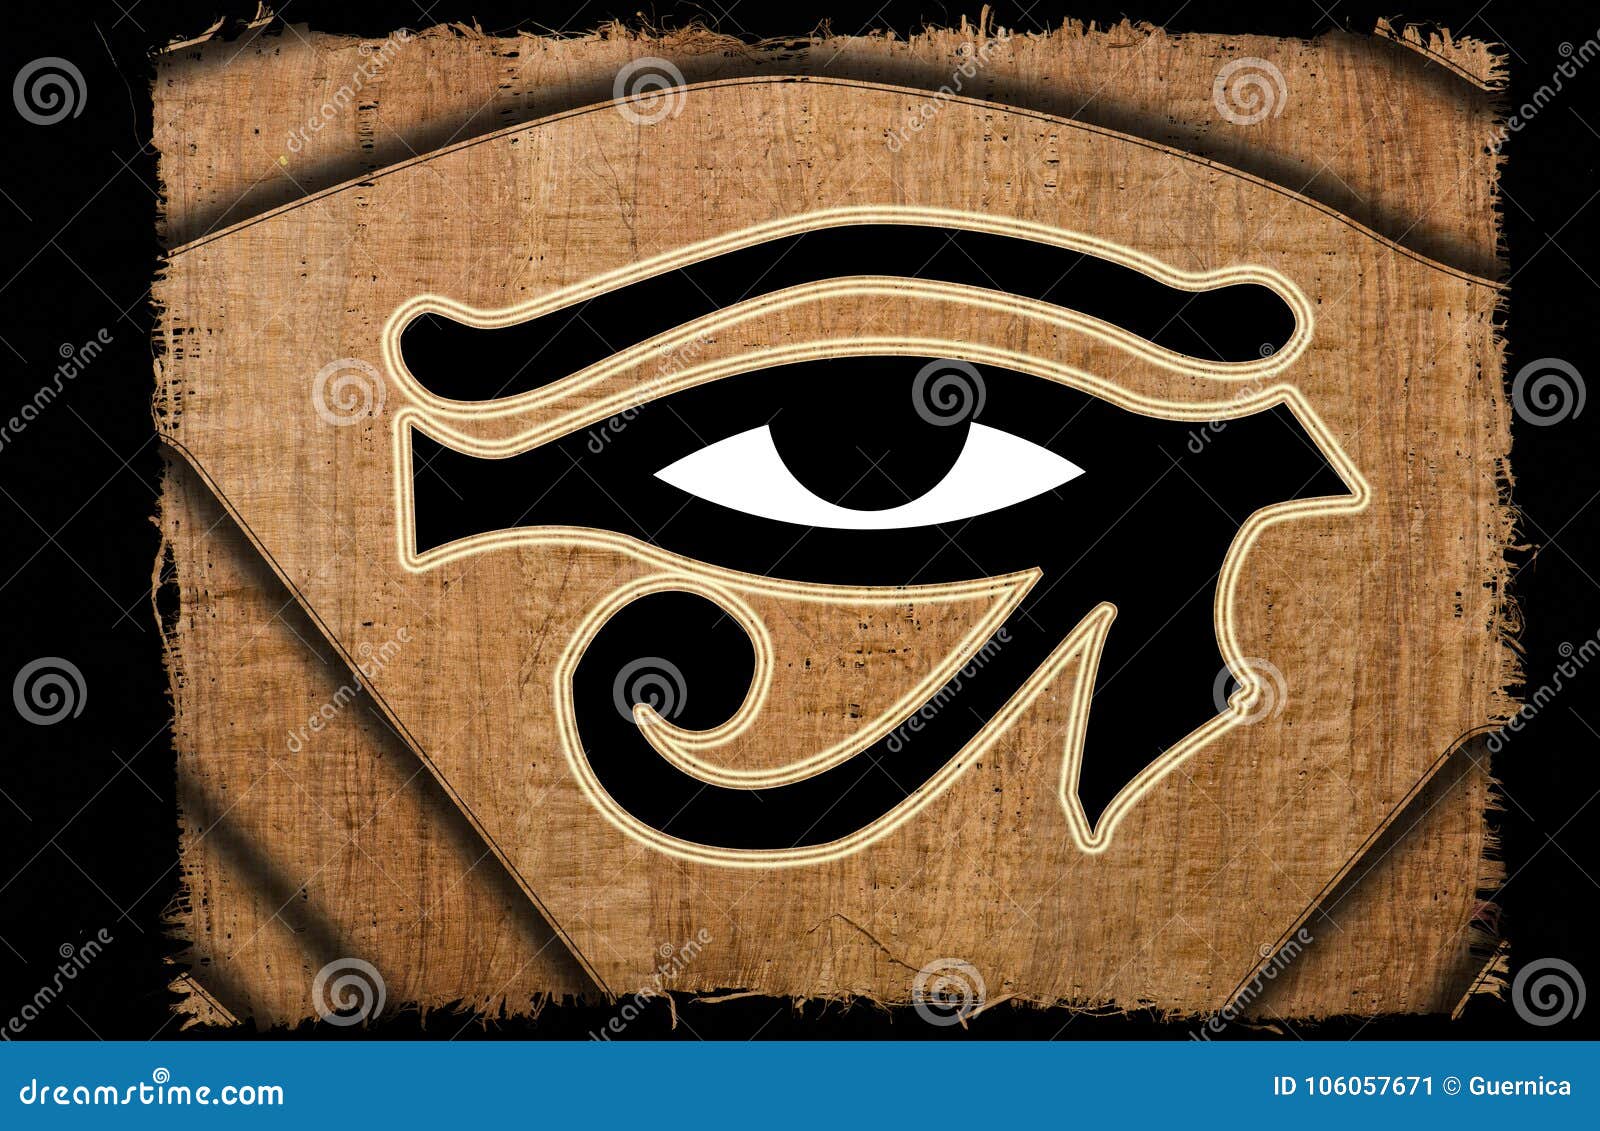 beautiful eye of horus vintage on papyrus